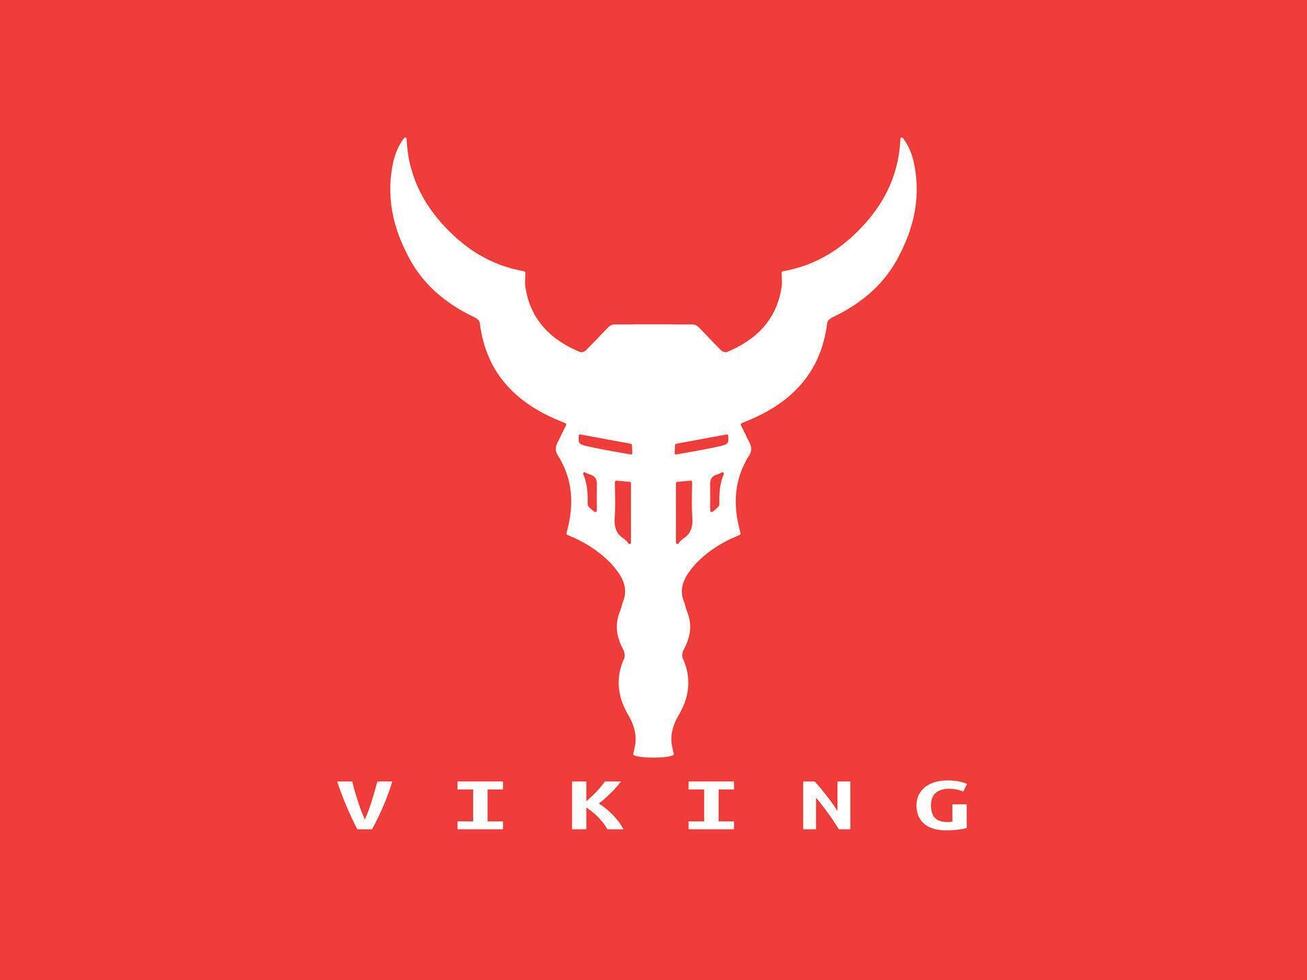 viking logotipo Projeto ícone símbolo vetor ilustração.